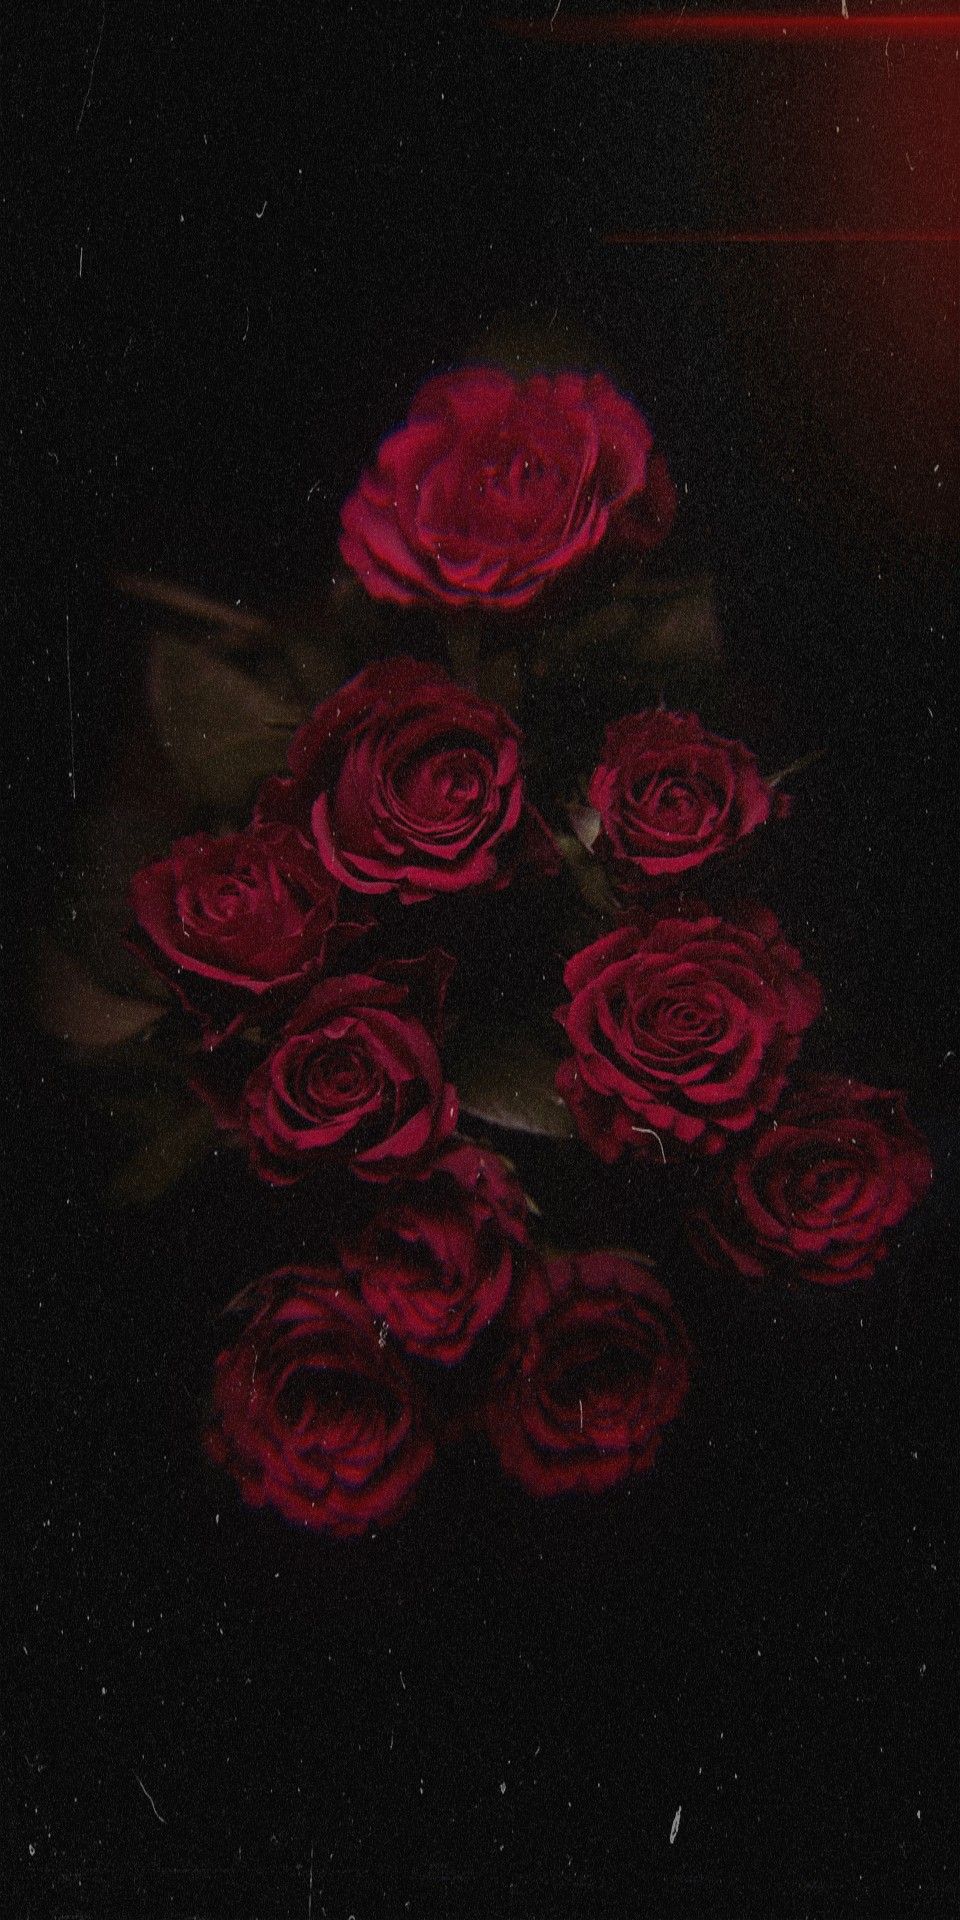 Red roses on a black background - Roses, black rose